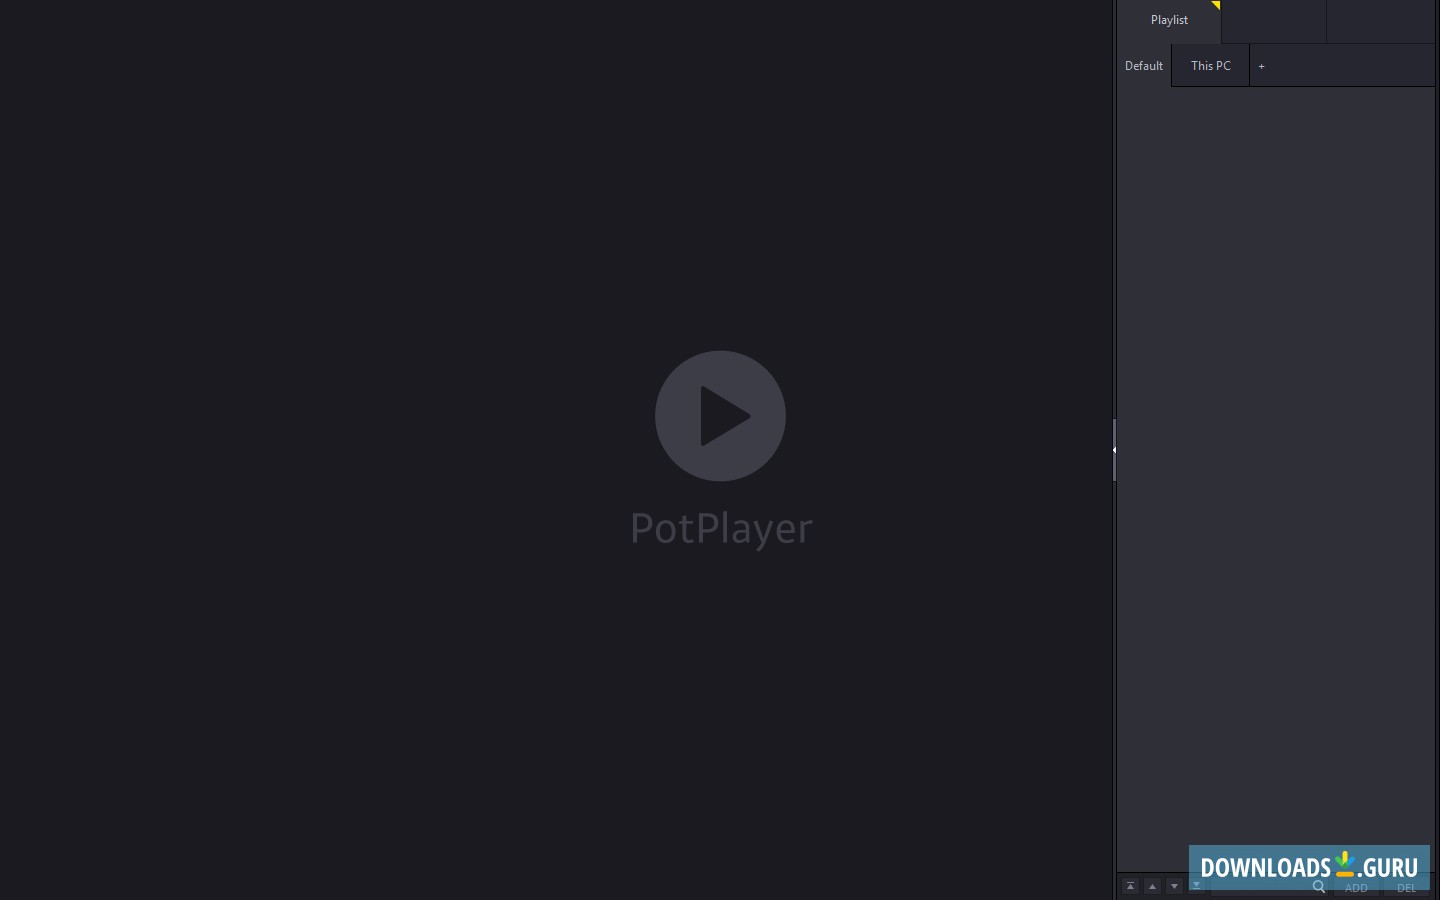 potplayer playlist download